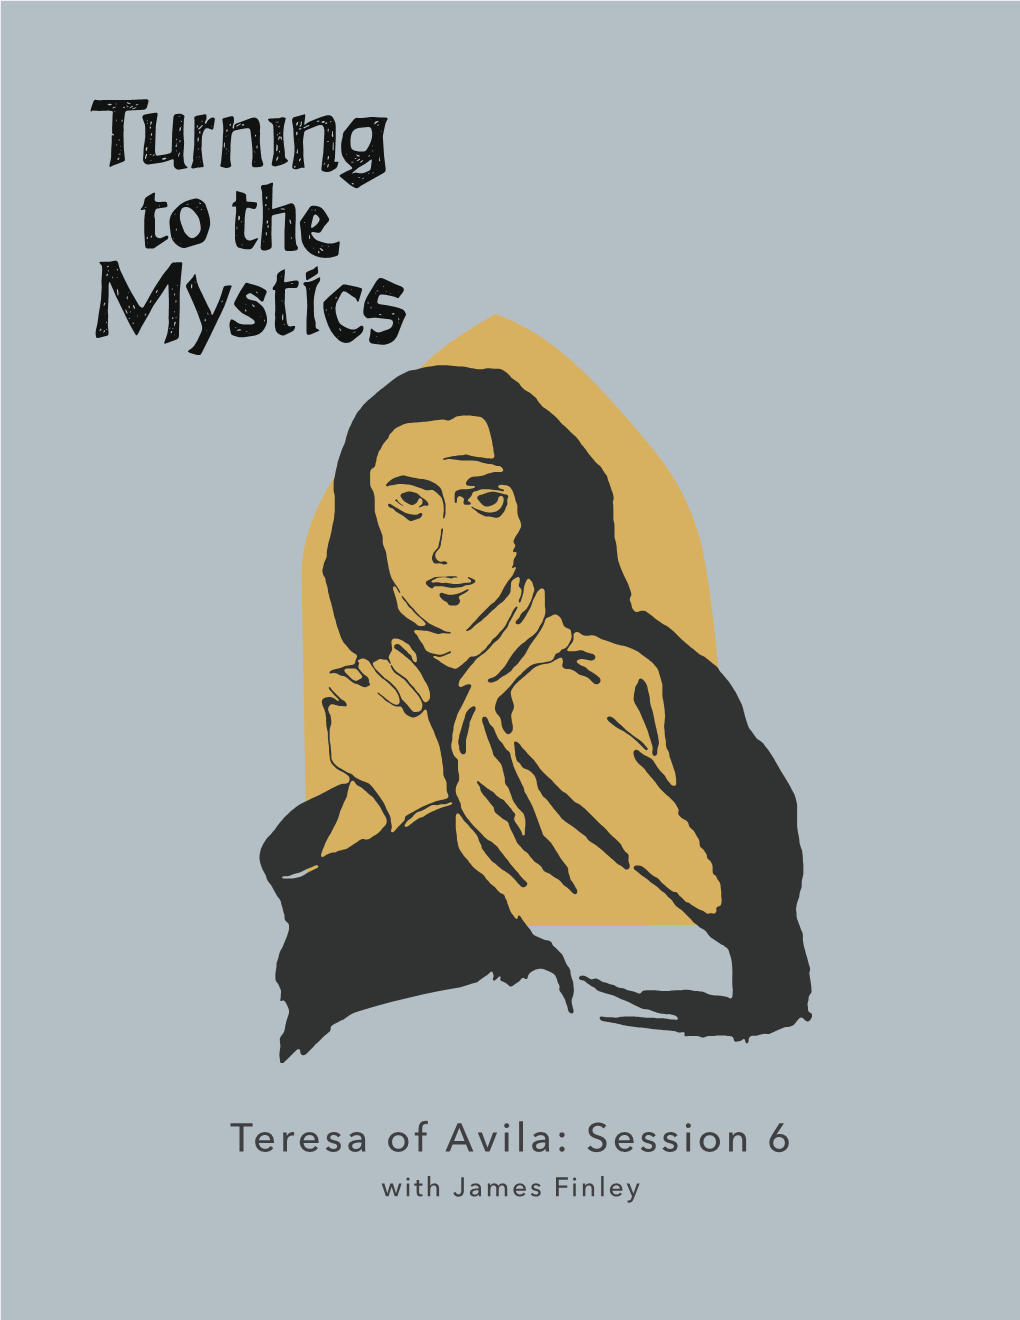 Teresa of Avila: Session 6 with James Finley Jim Finley: [Music] Greetings